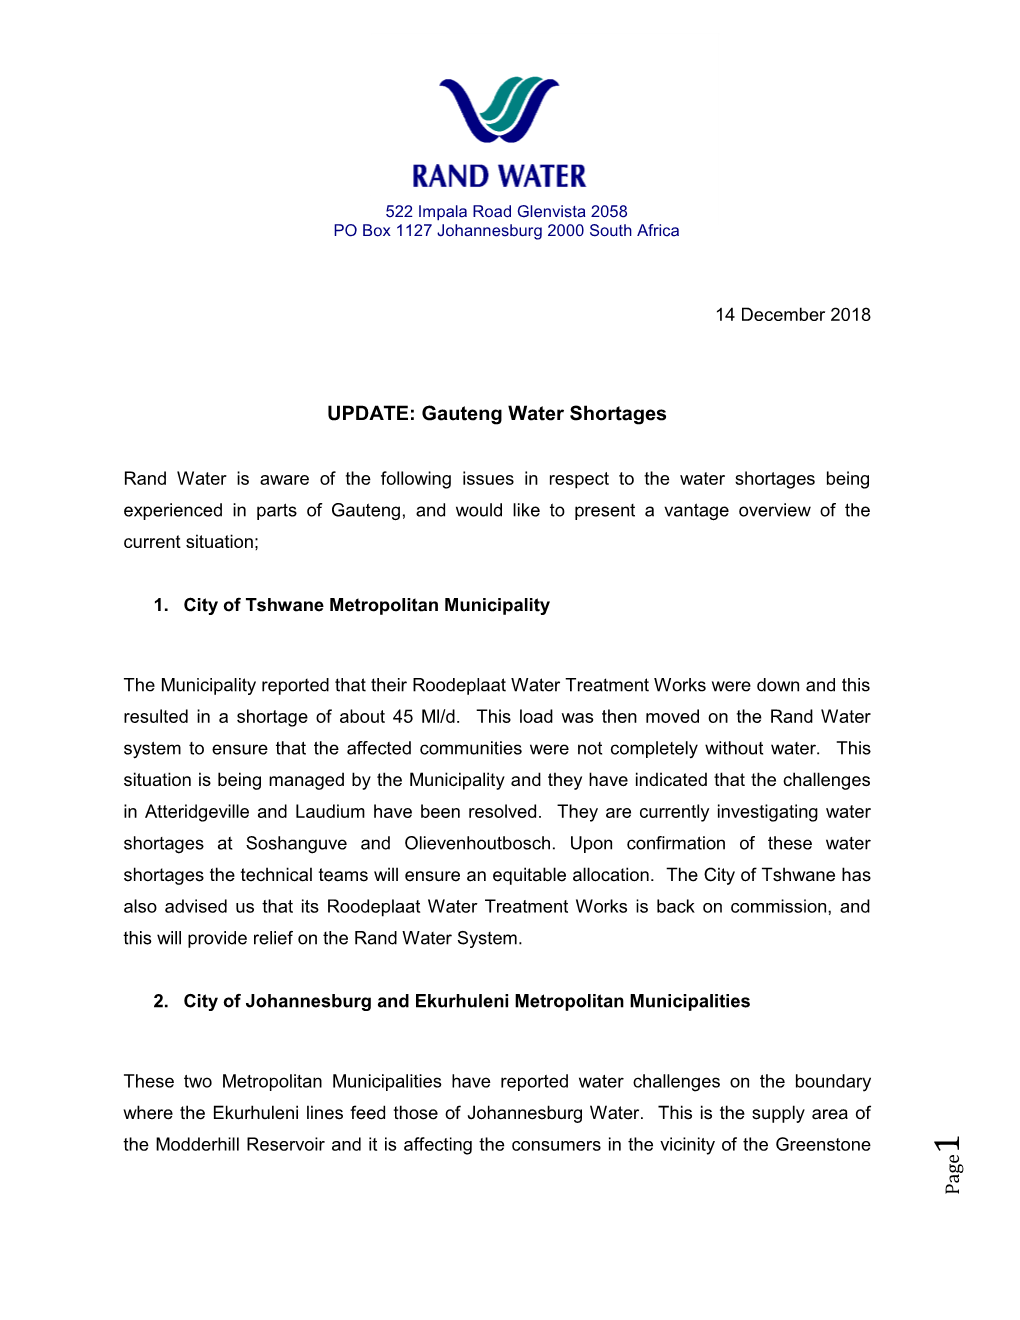 Page UPDATE: Gauteng Water Shortages